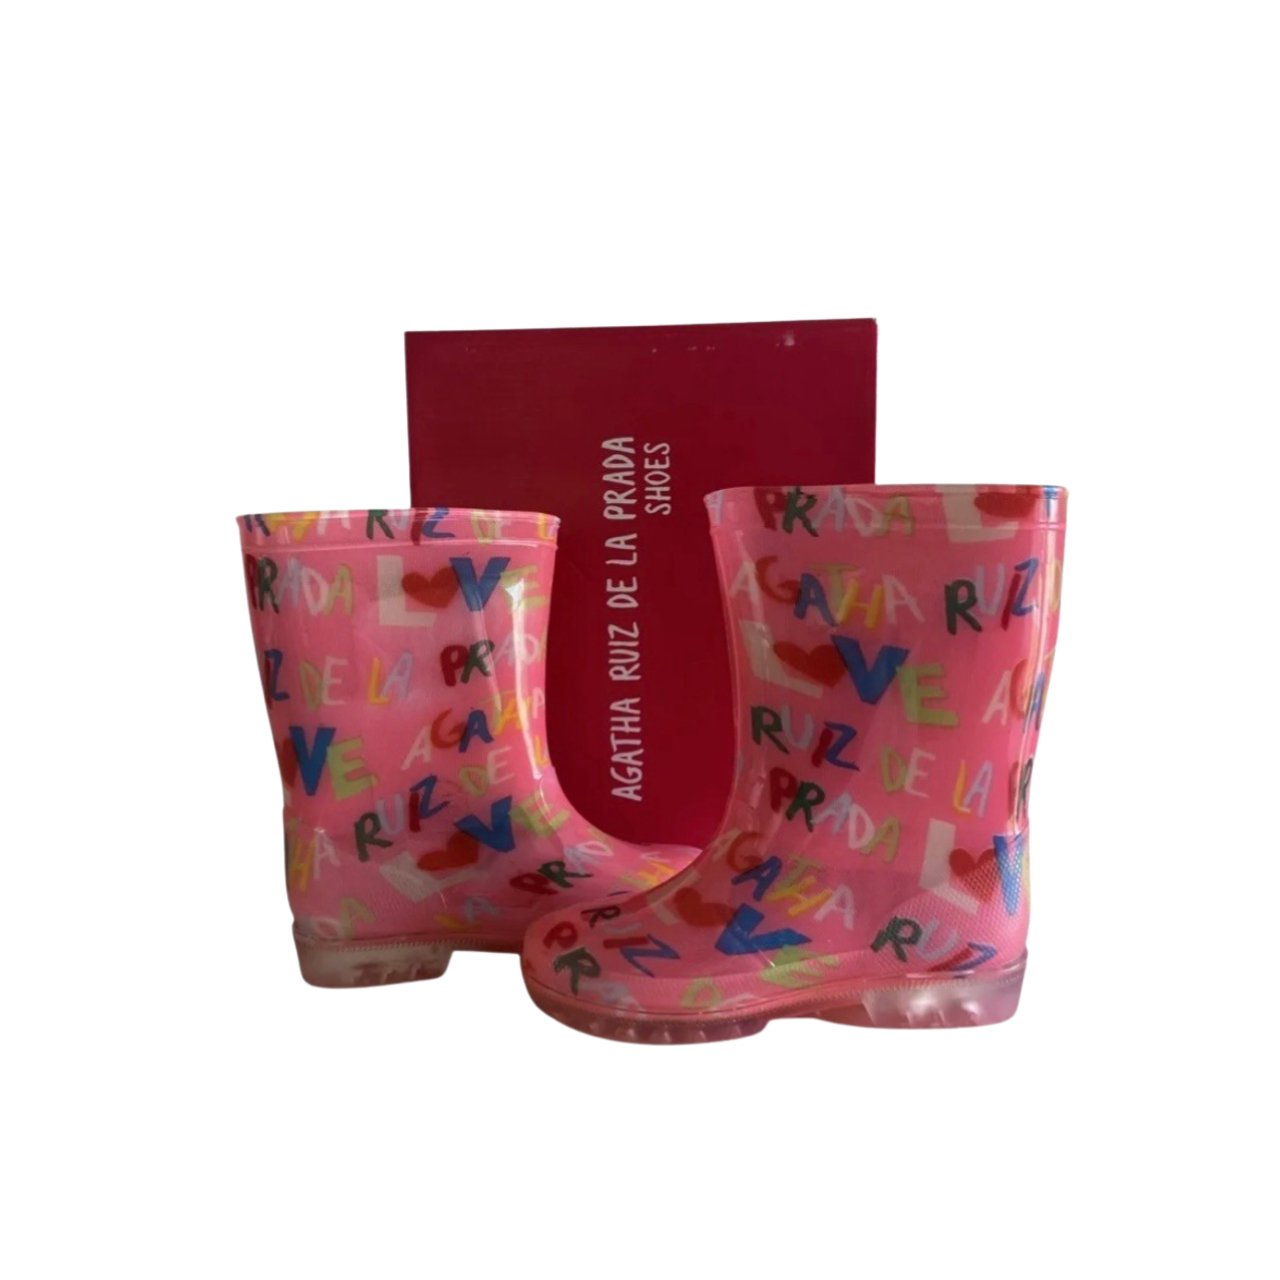 Agatha Ruiz de la Prada Kids Pink Wellington Boots - Soul and Sense Streetwear